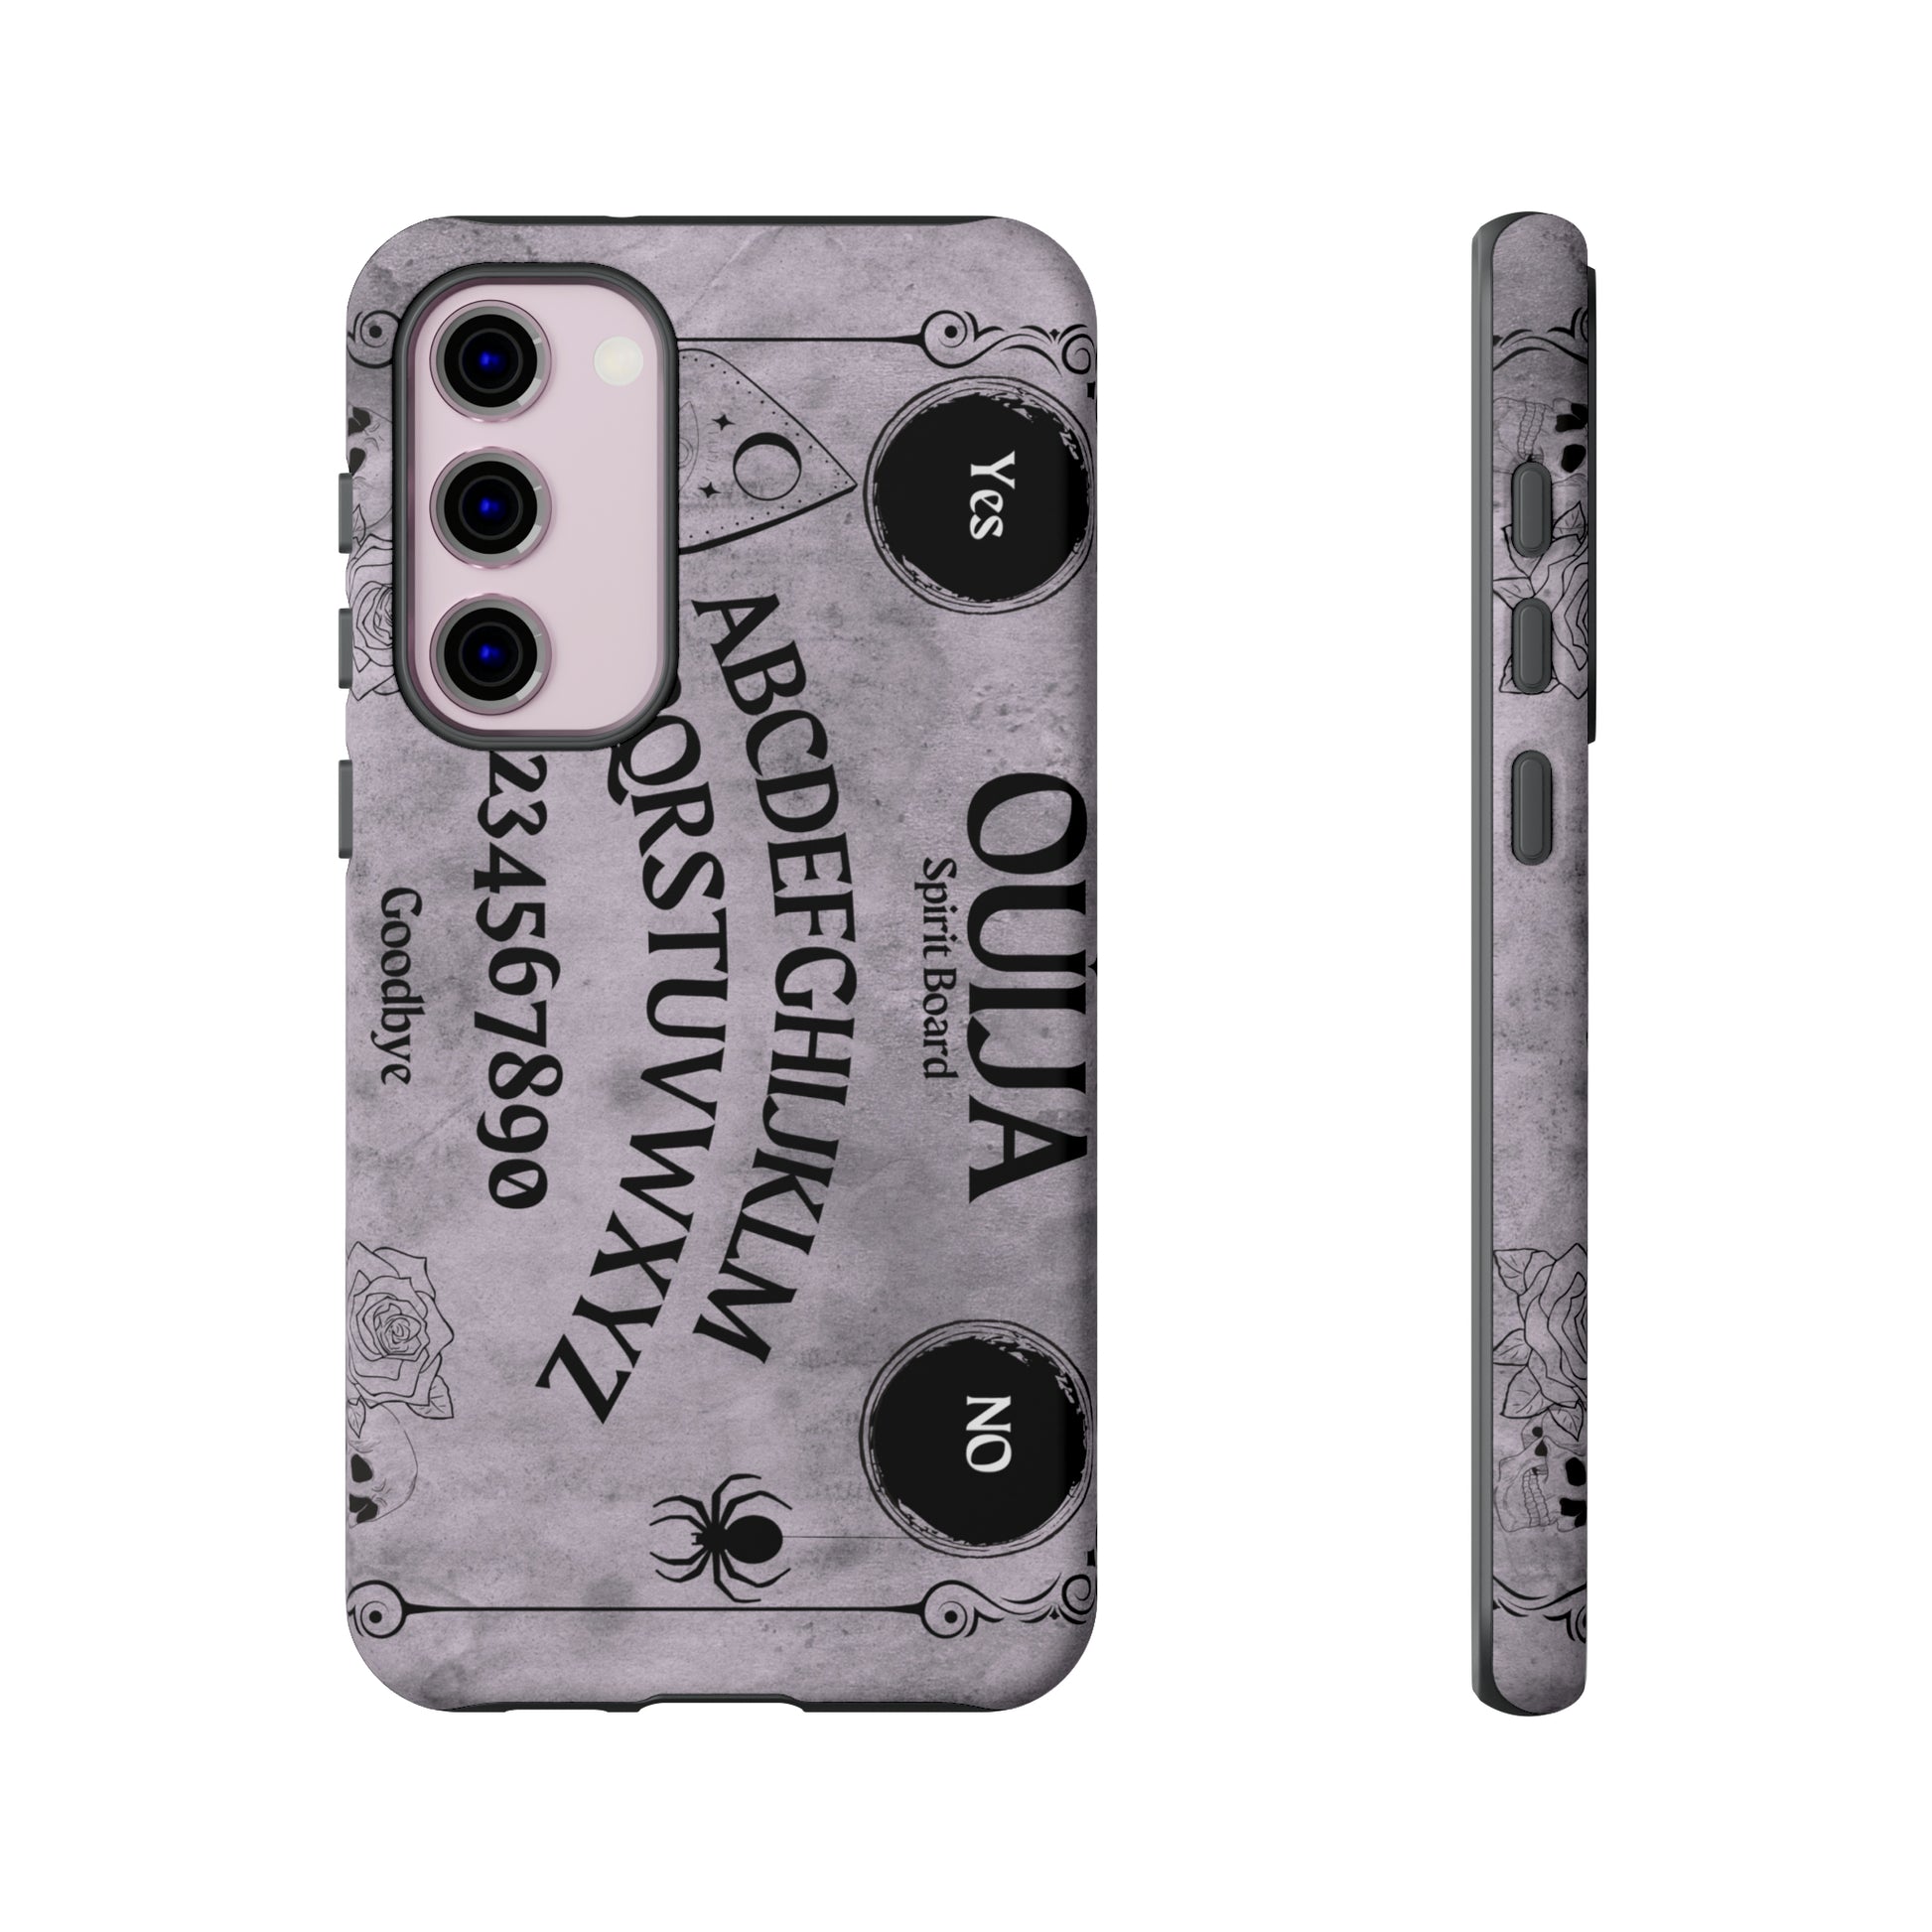 Ouija Board Tough Phone Cases For Samsung iPhone GooglePhone CaseVTZdesignsSamsung Galaxy S23 PlusMatteAccessoriesGlossyhalloween